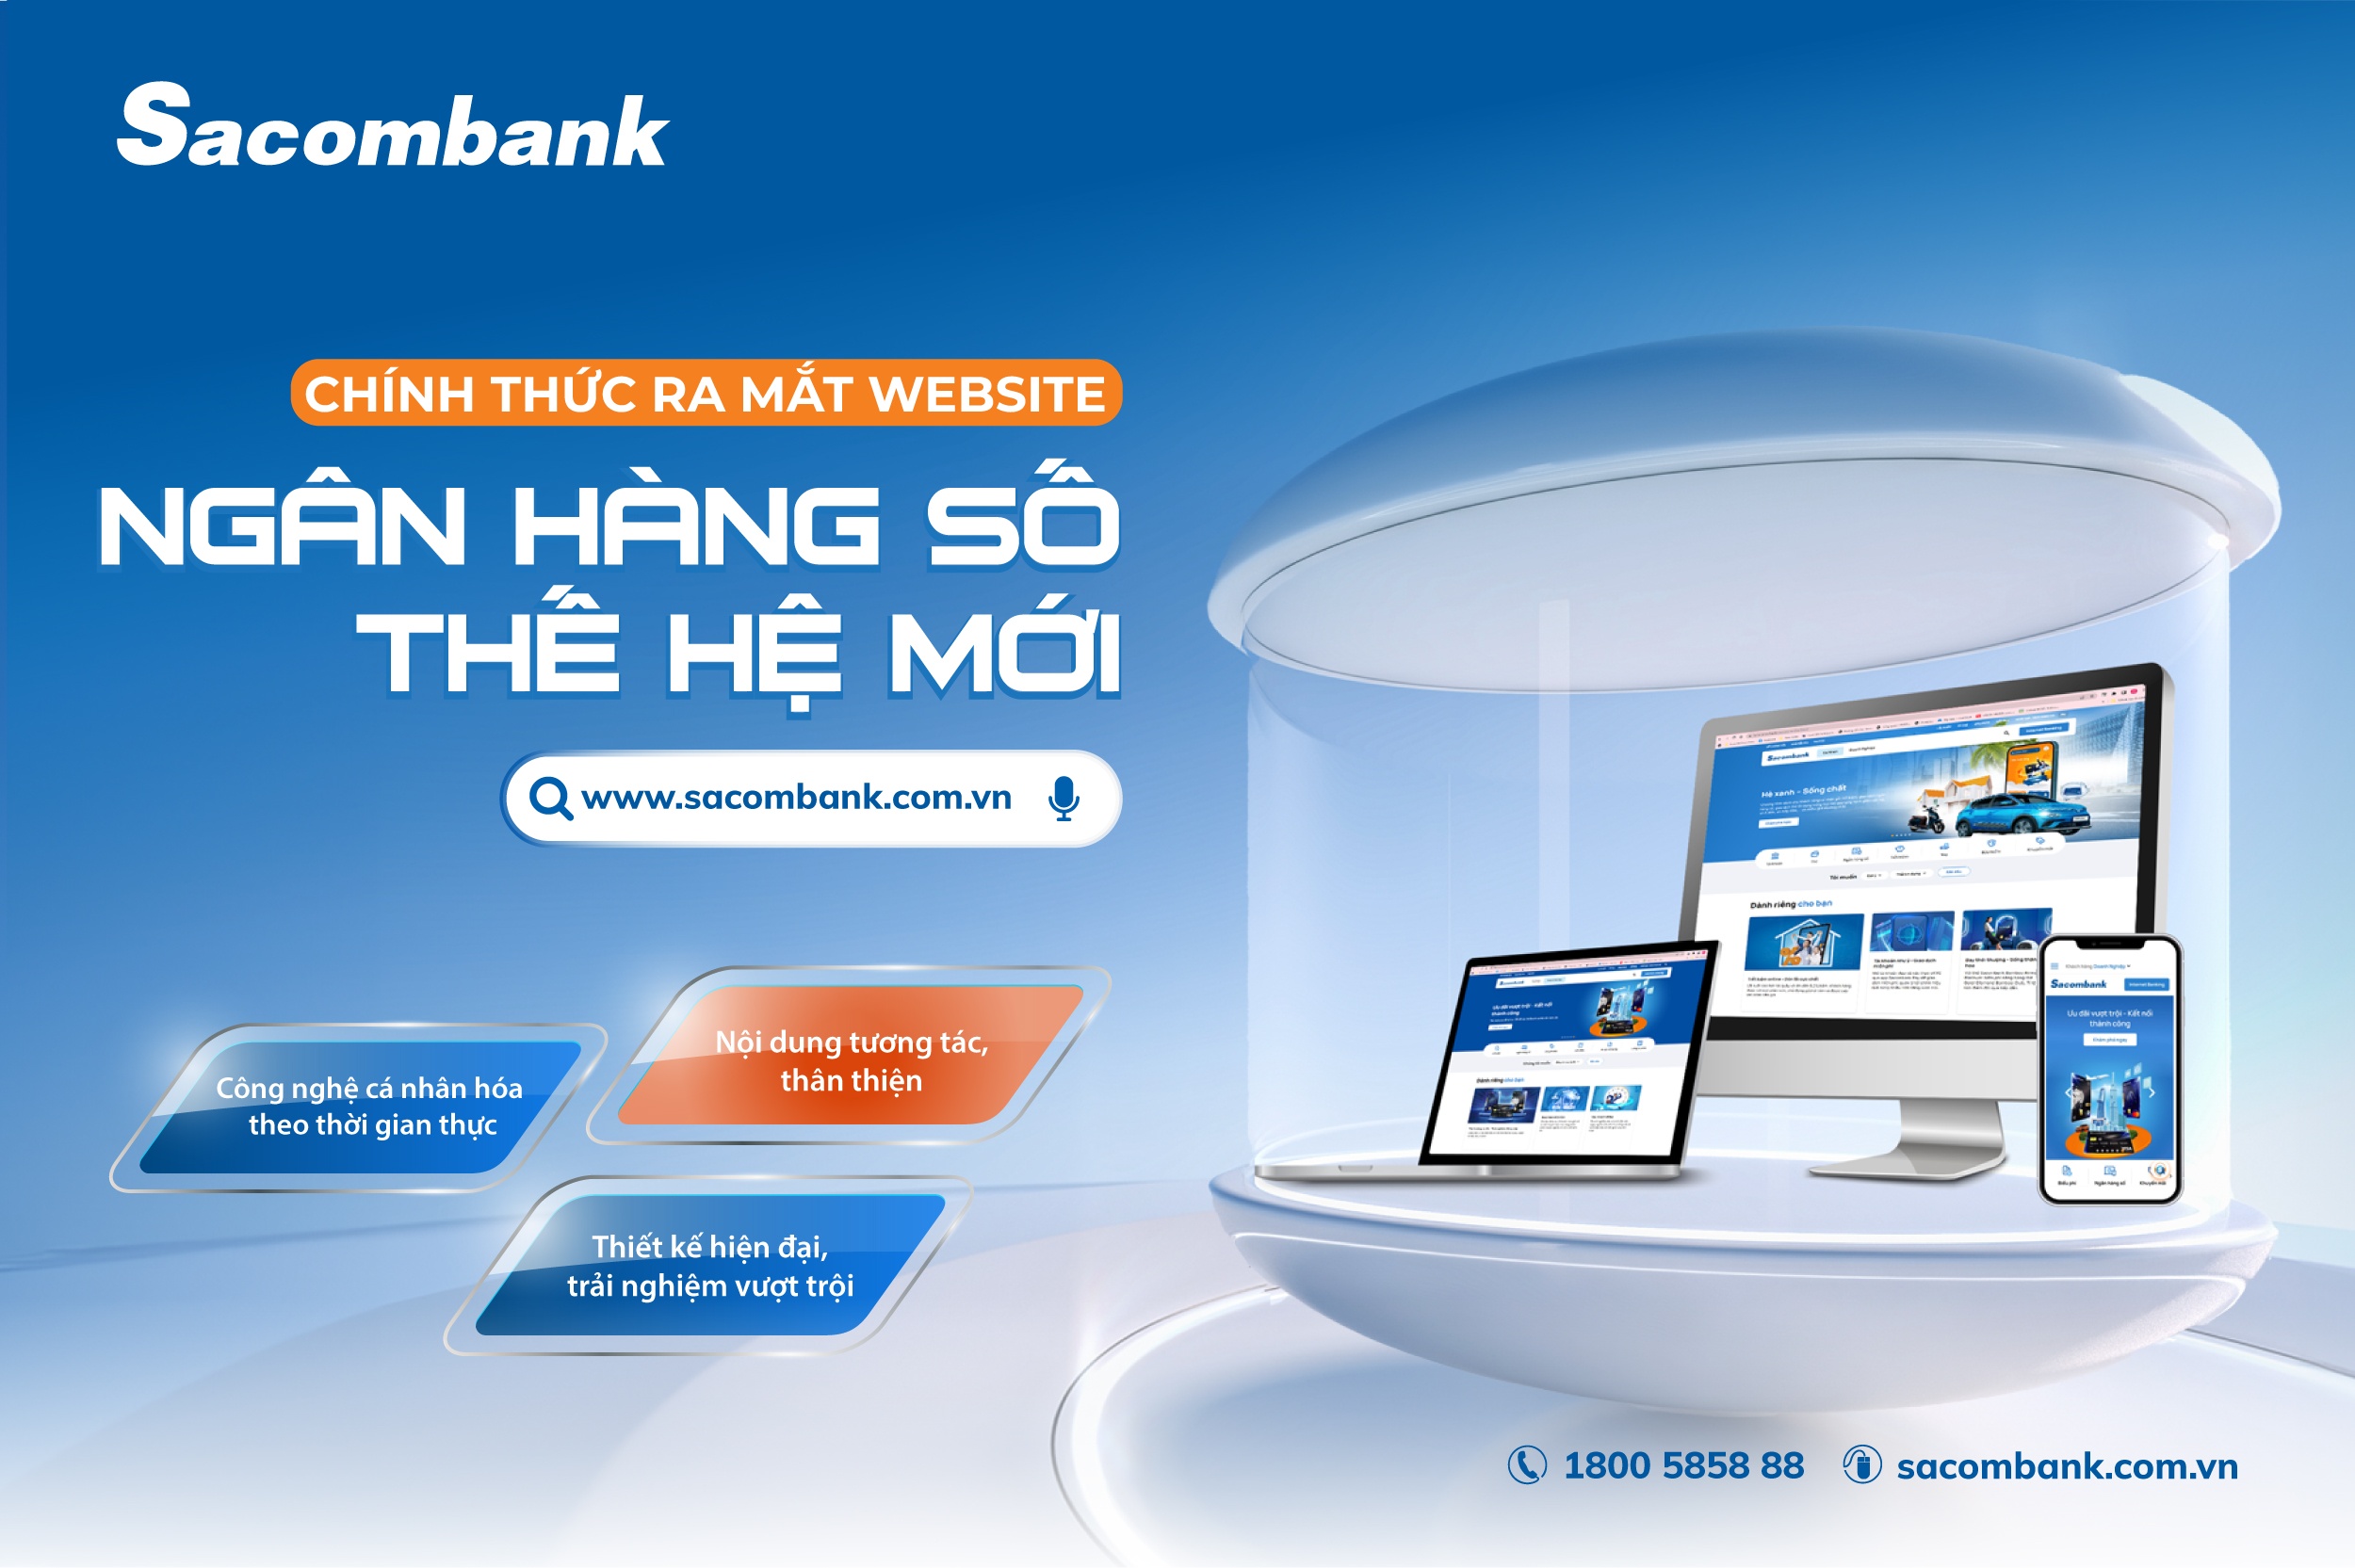 sacombank chinh thuc ra mat website ngan hang so the he moi